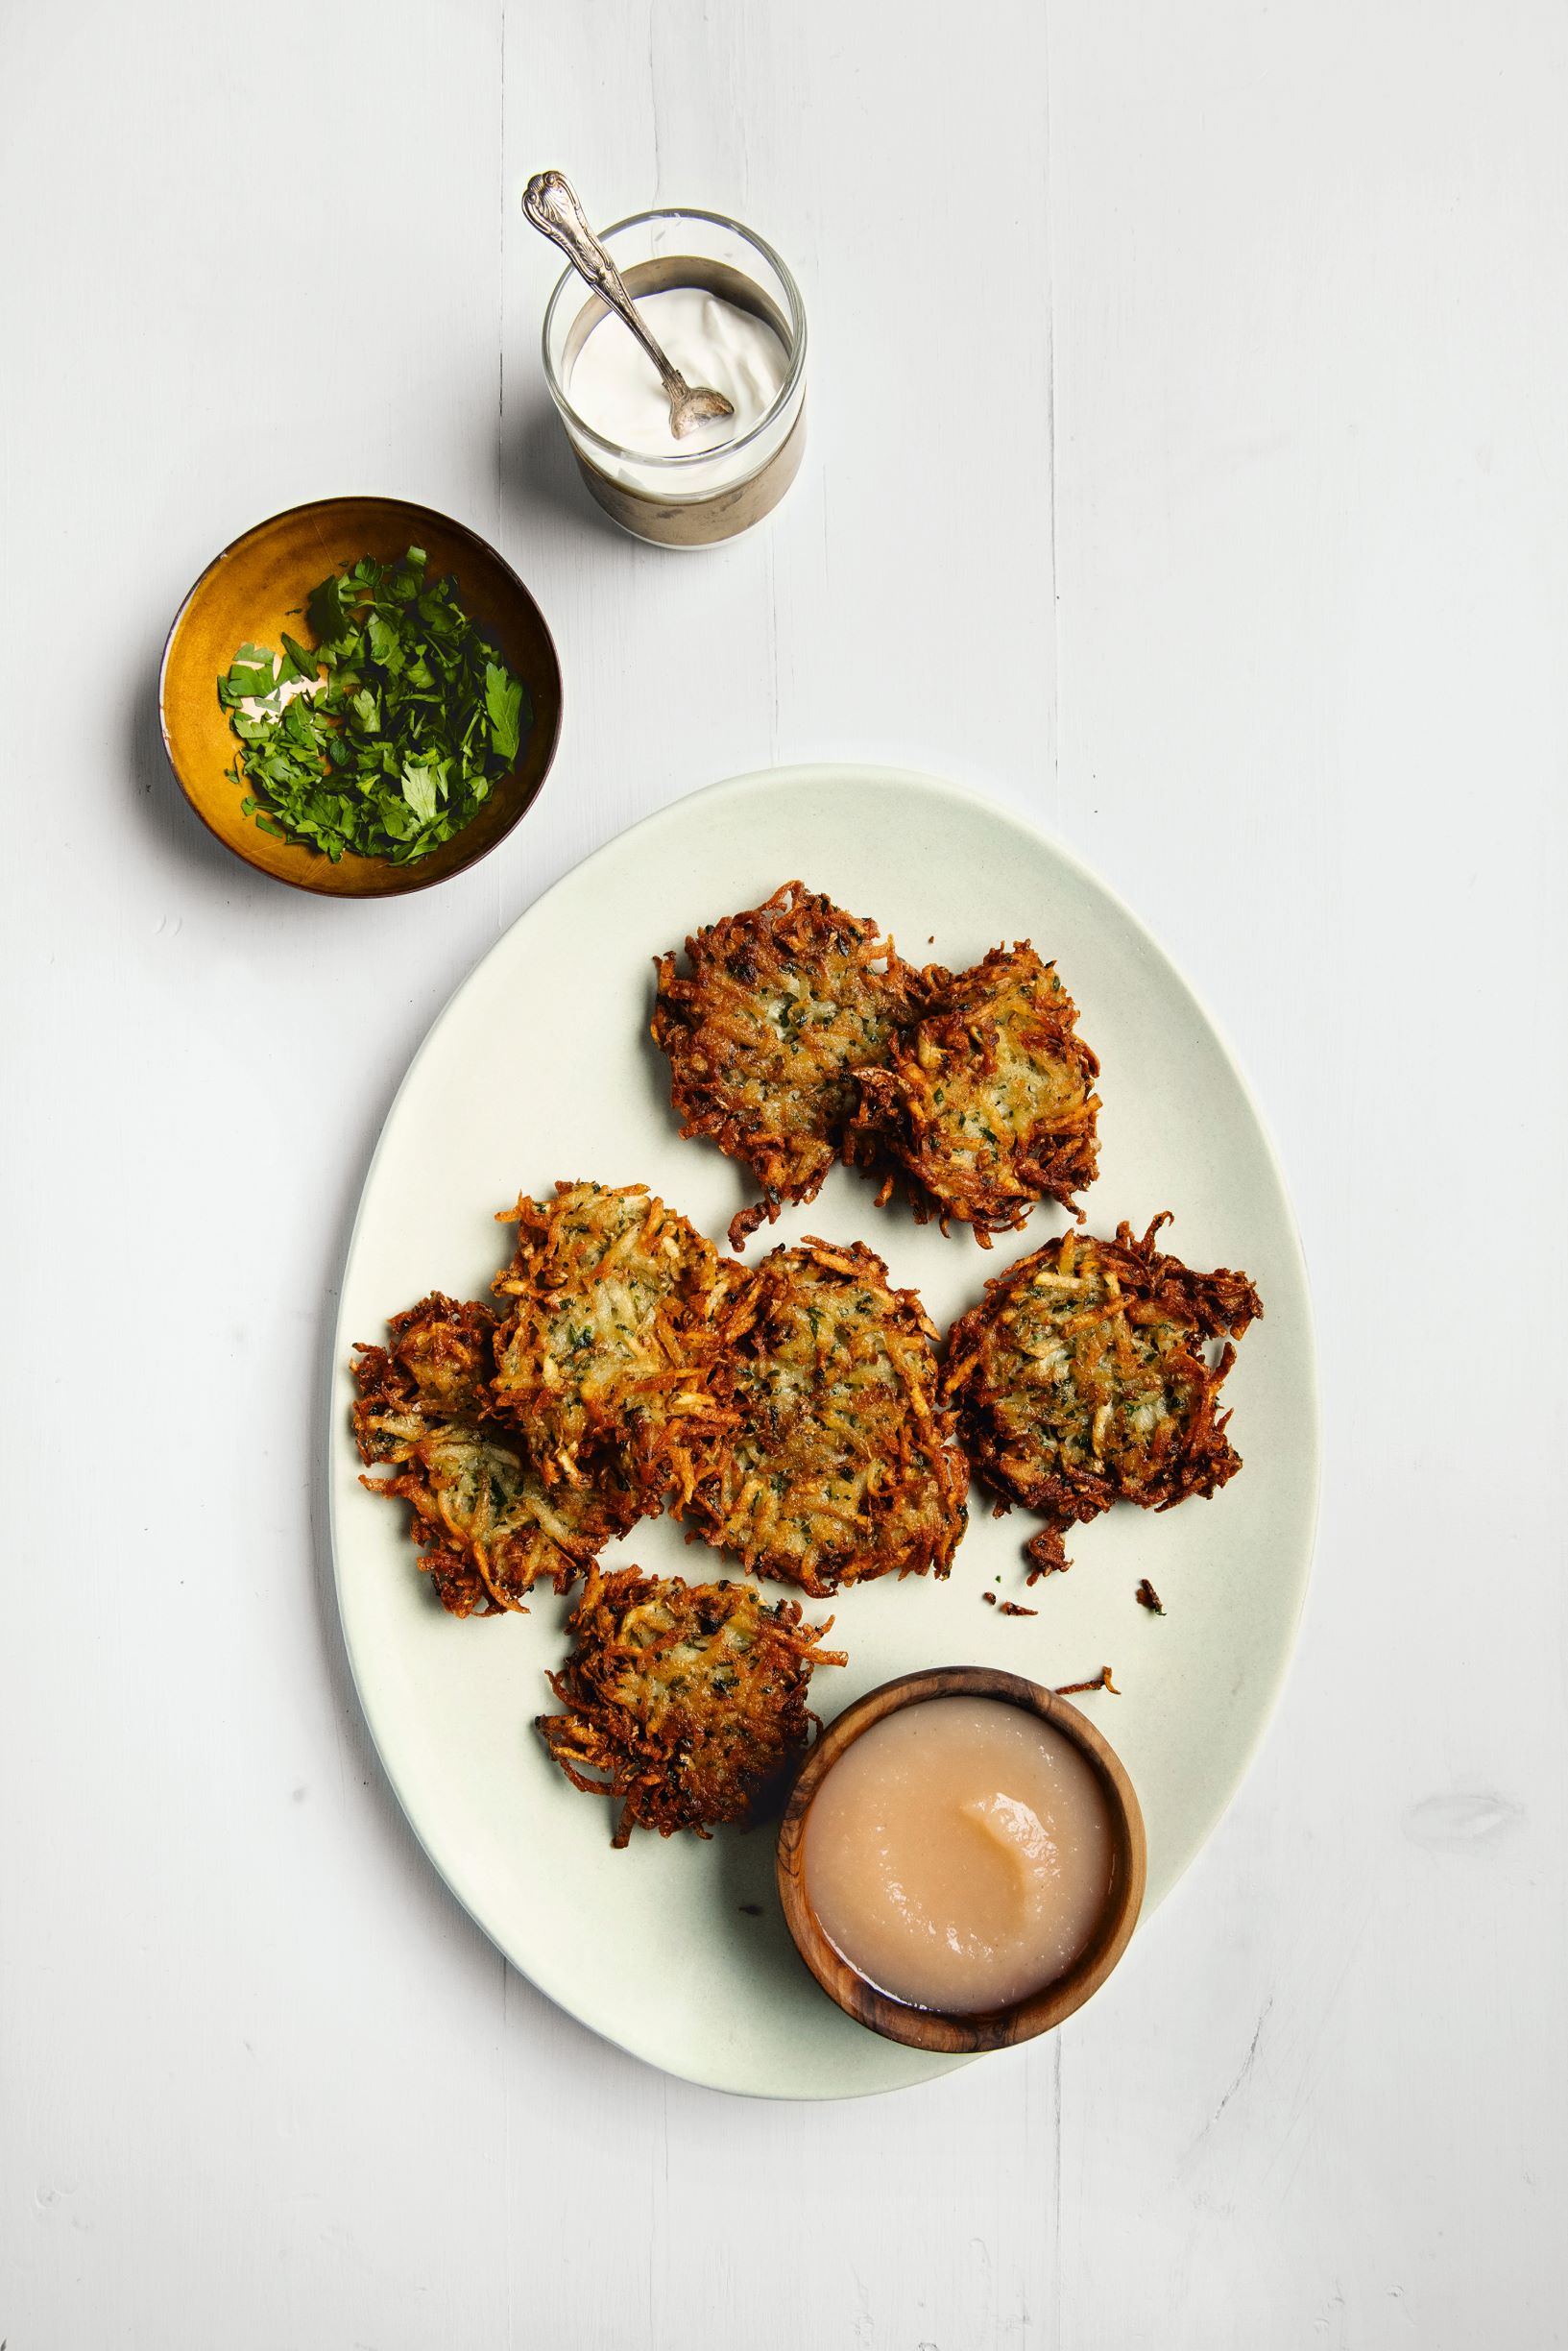 Potato latkes - The Jewish Cookbook